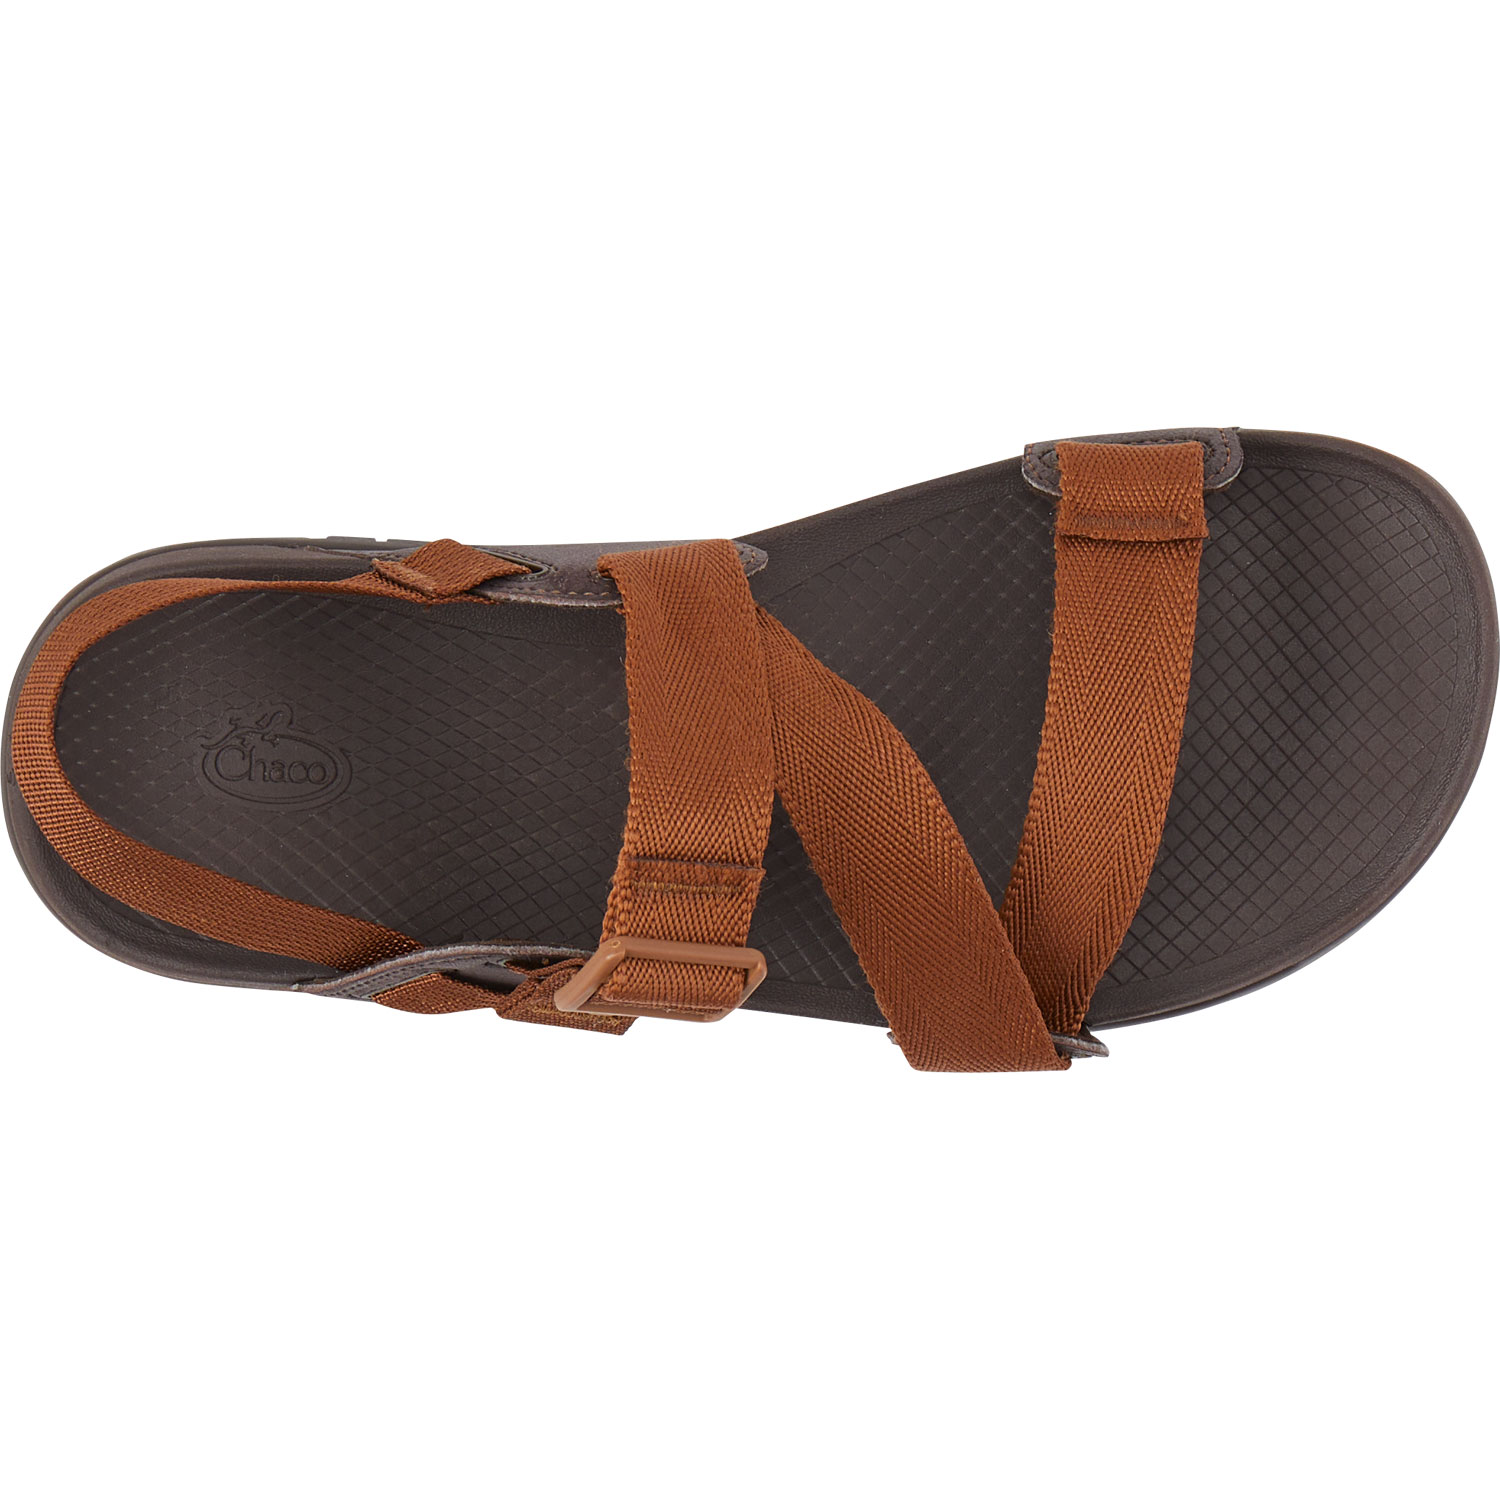 Men's Chaco Lowdown Sandals